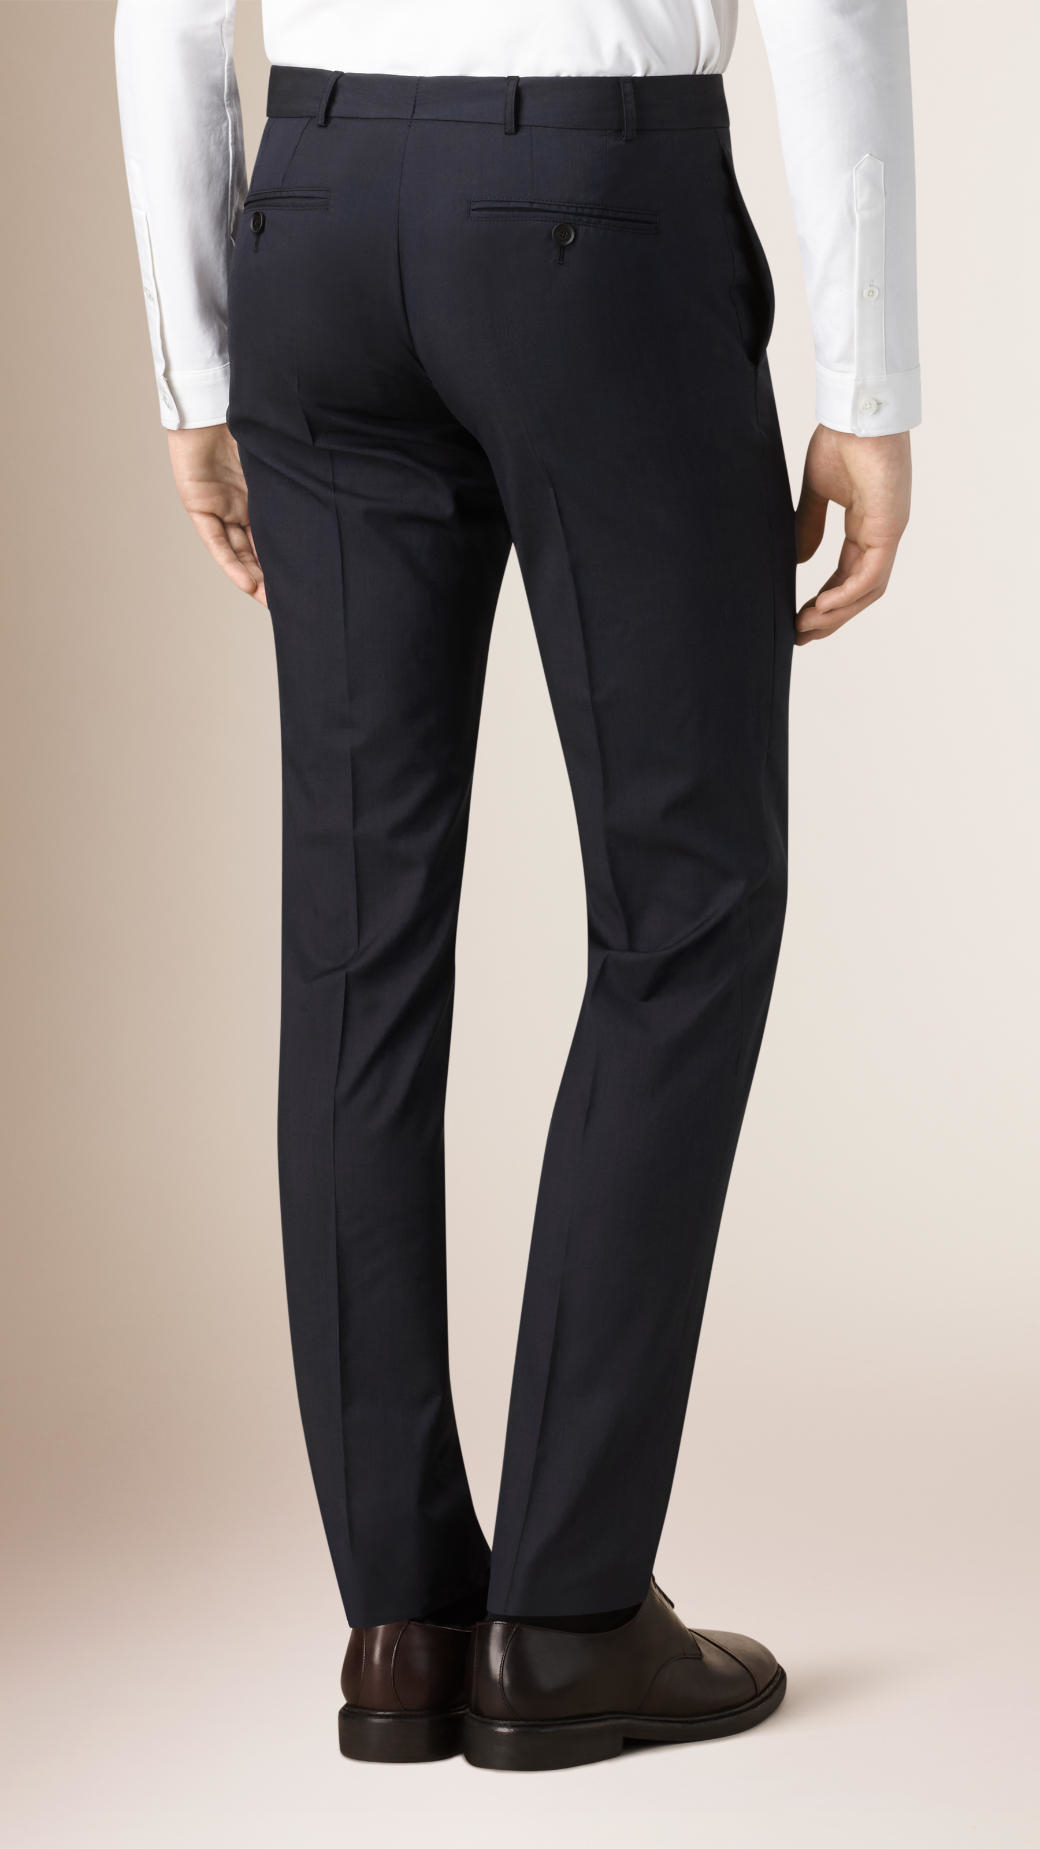 Lyst - Burberry Slim Fit Wool Silk Trousers in Black for Men